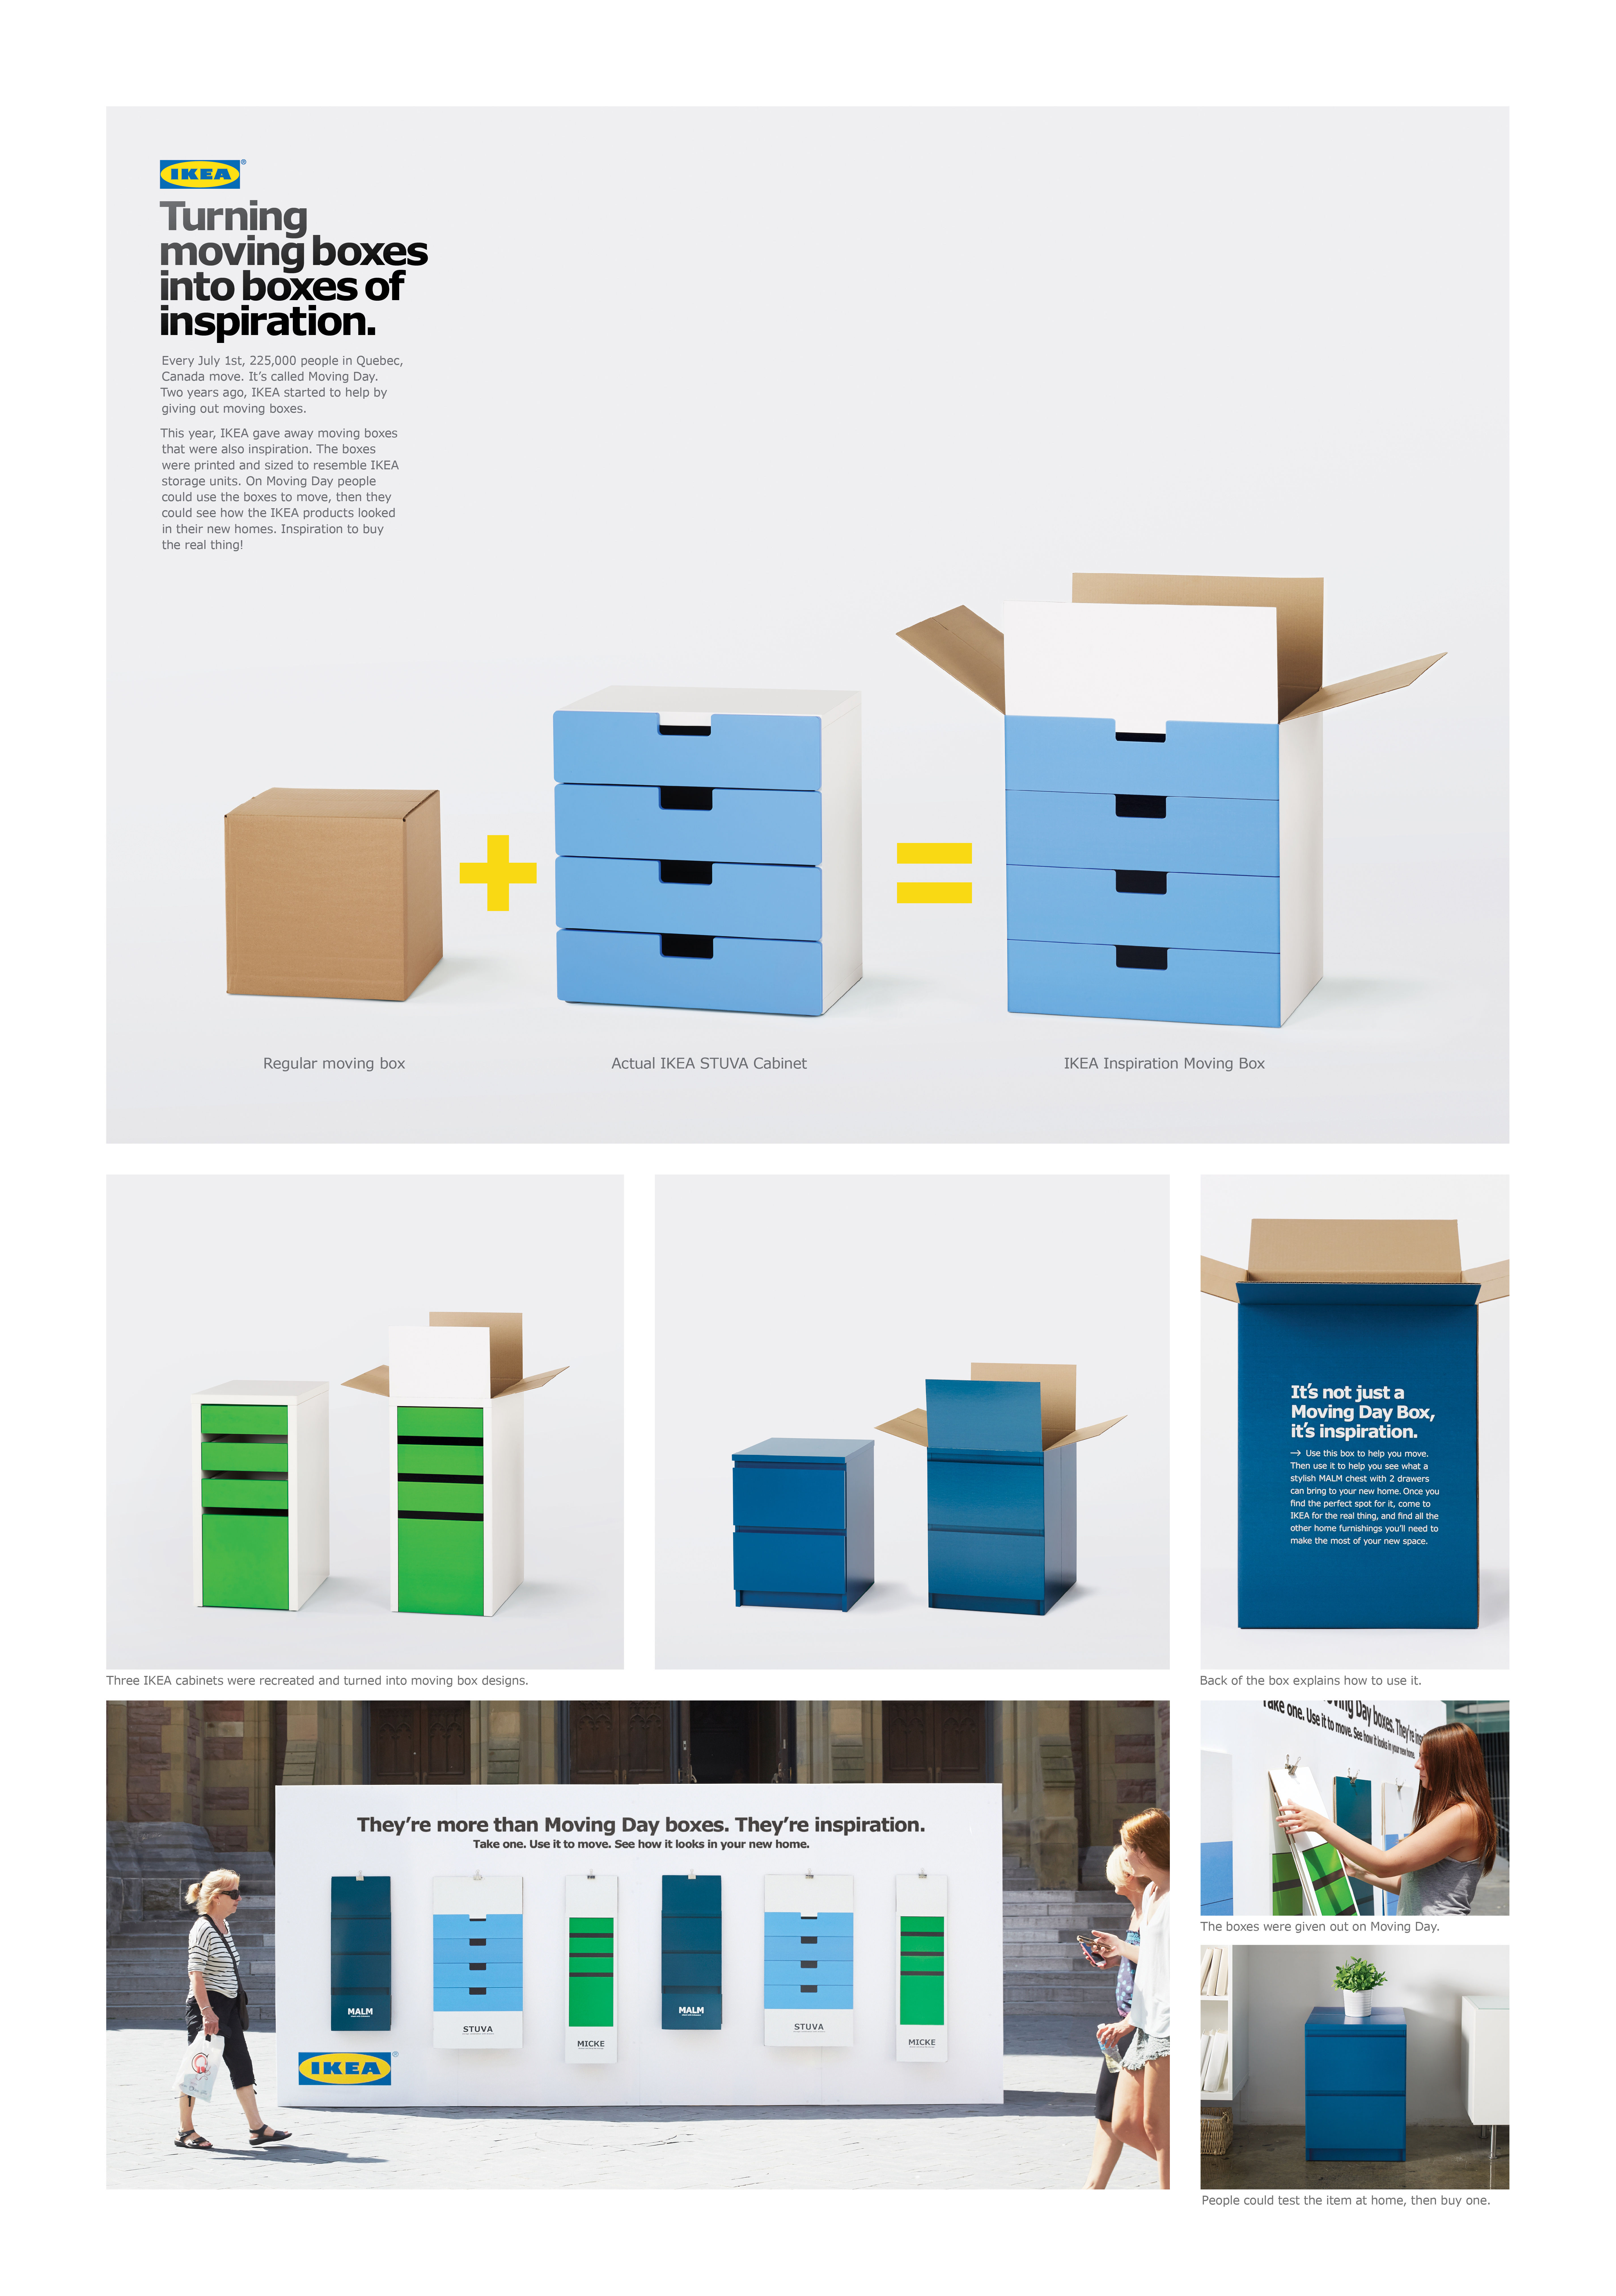 IKEA Inspiration Boxes campaign image